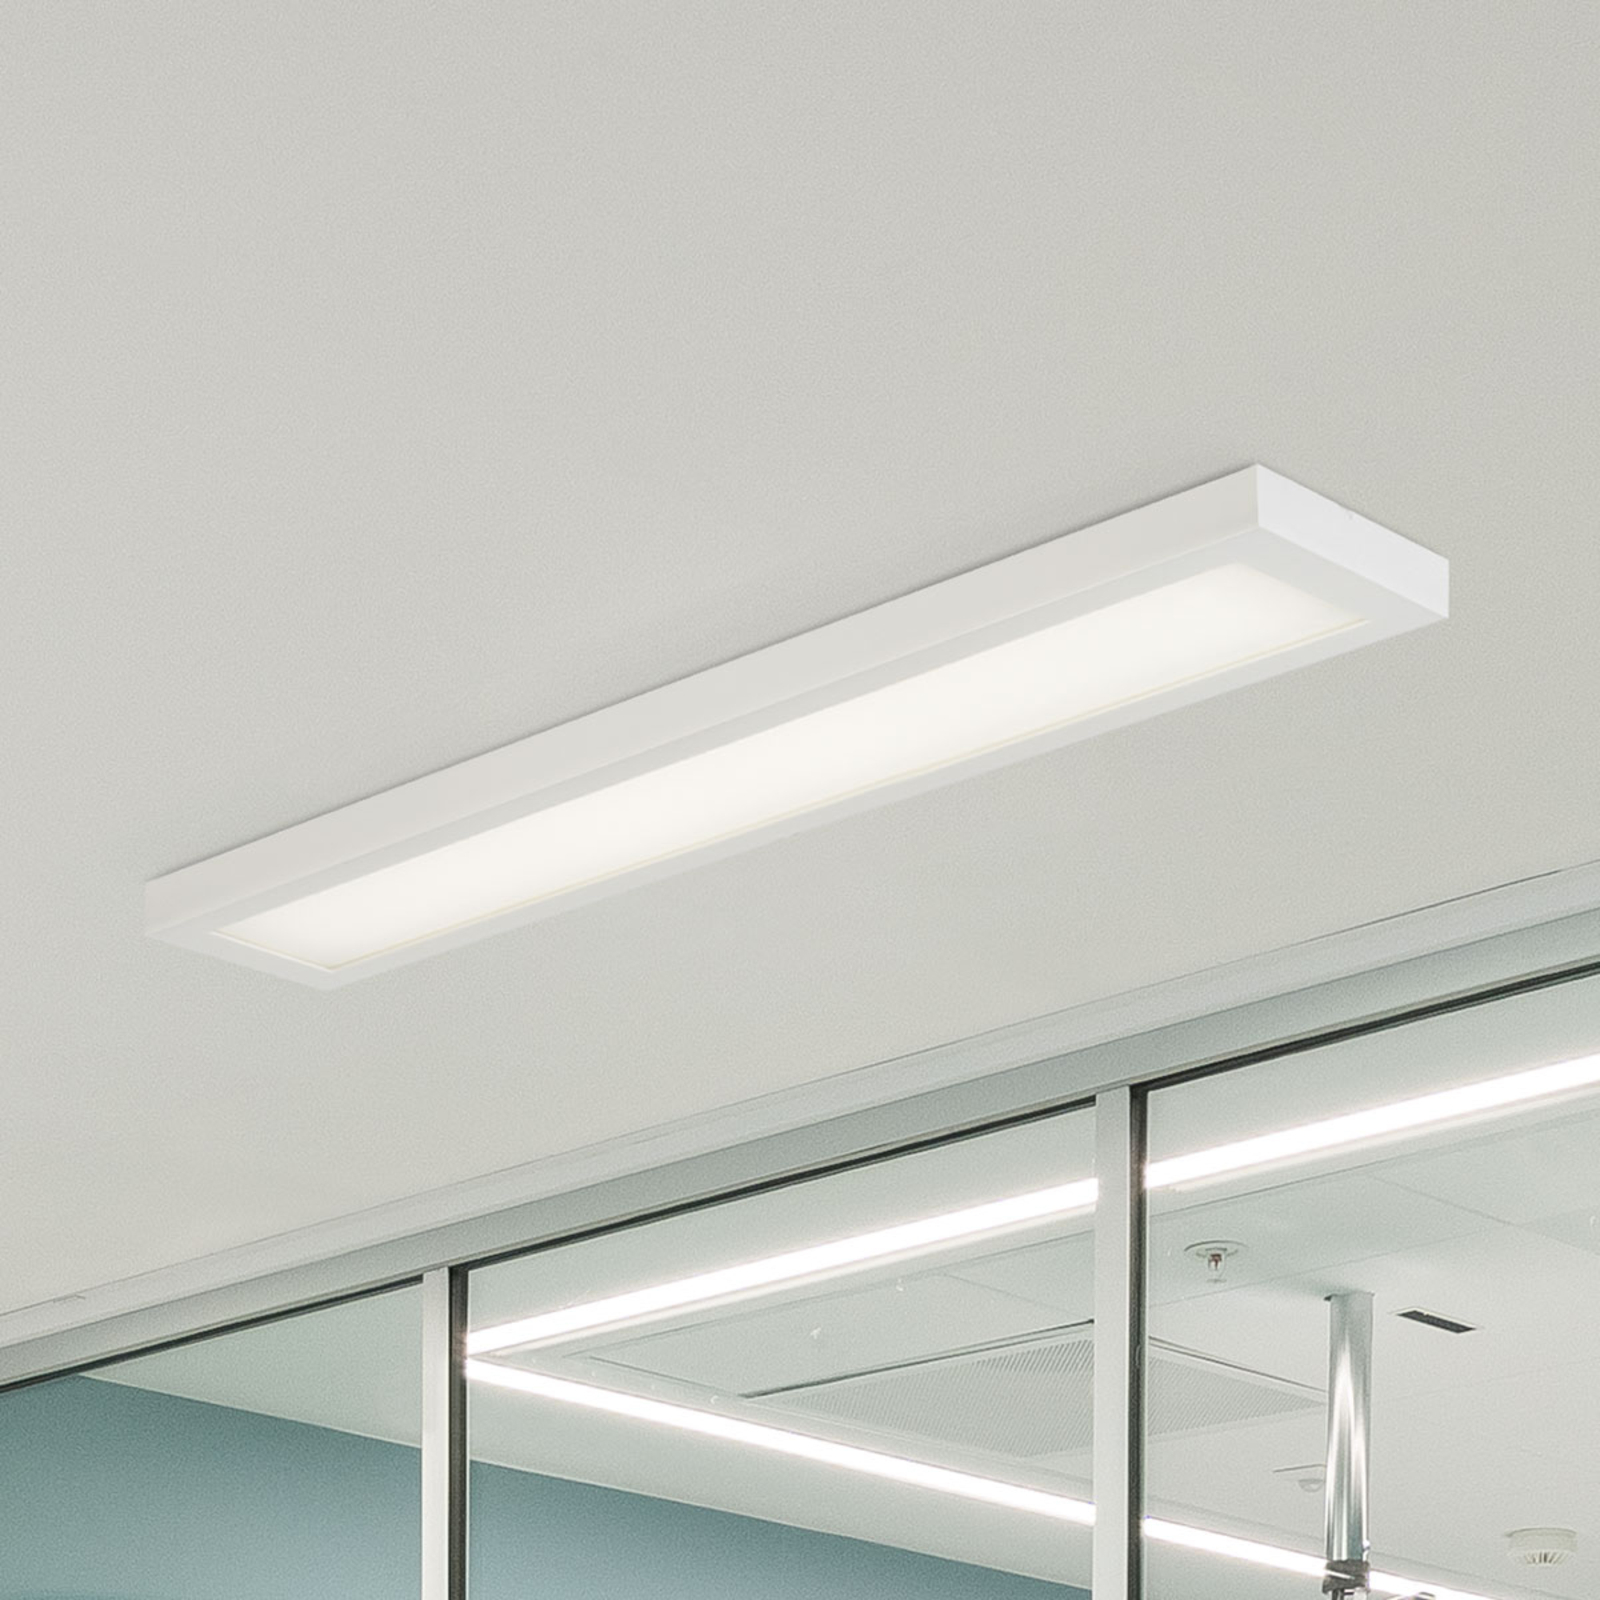 C70-S LED ceiling light MP HF 117x27cm 4,212lm 840